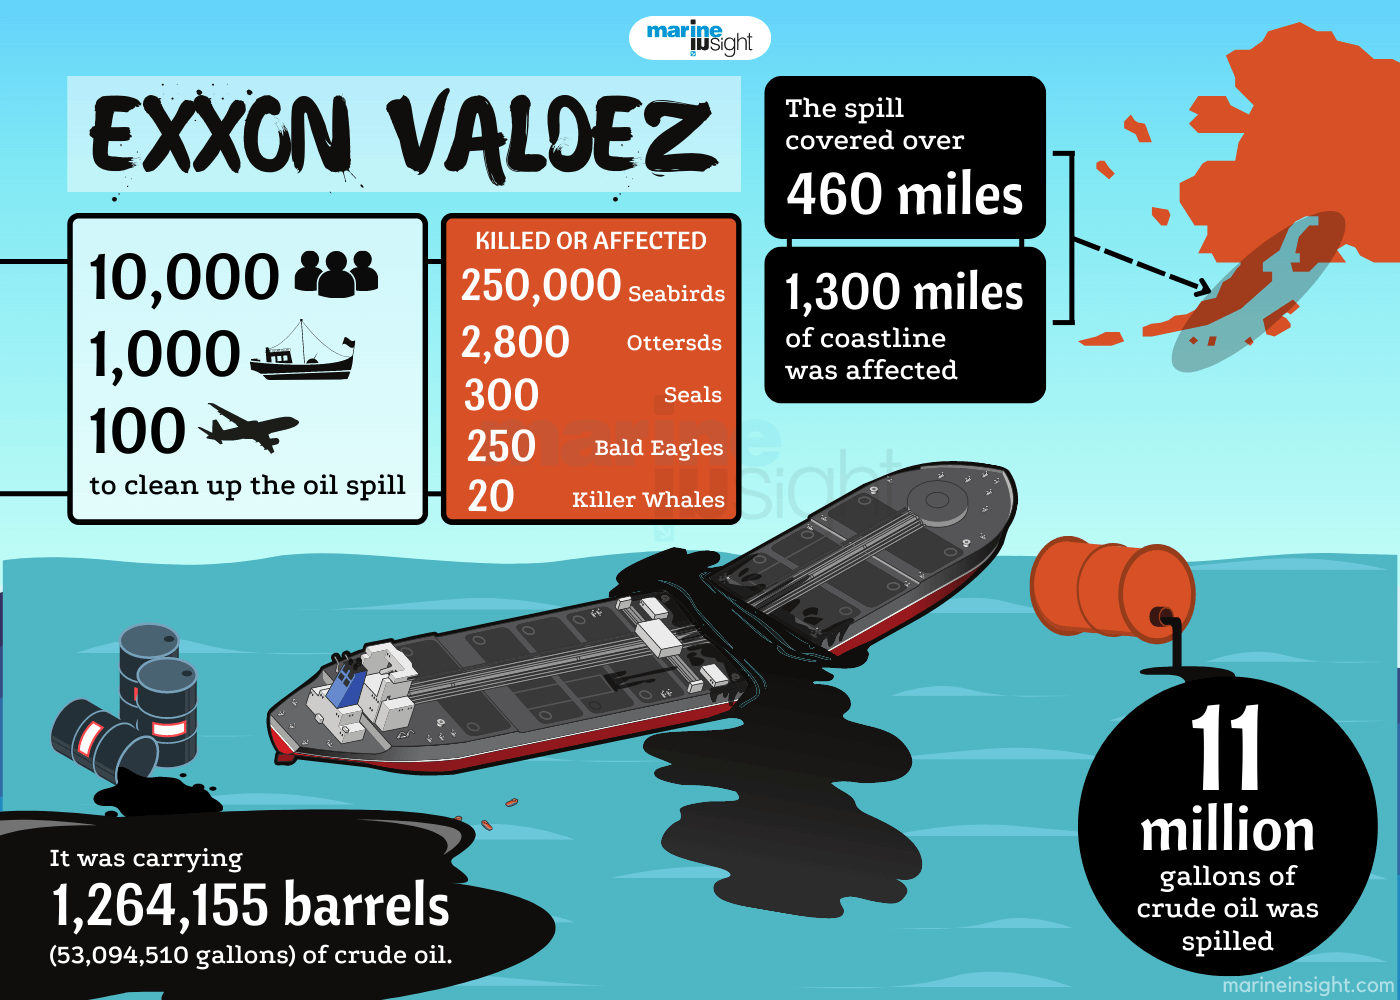 exxon valdez oil spill public relations case study